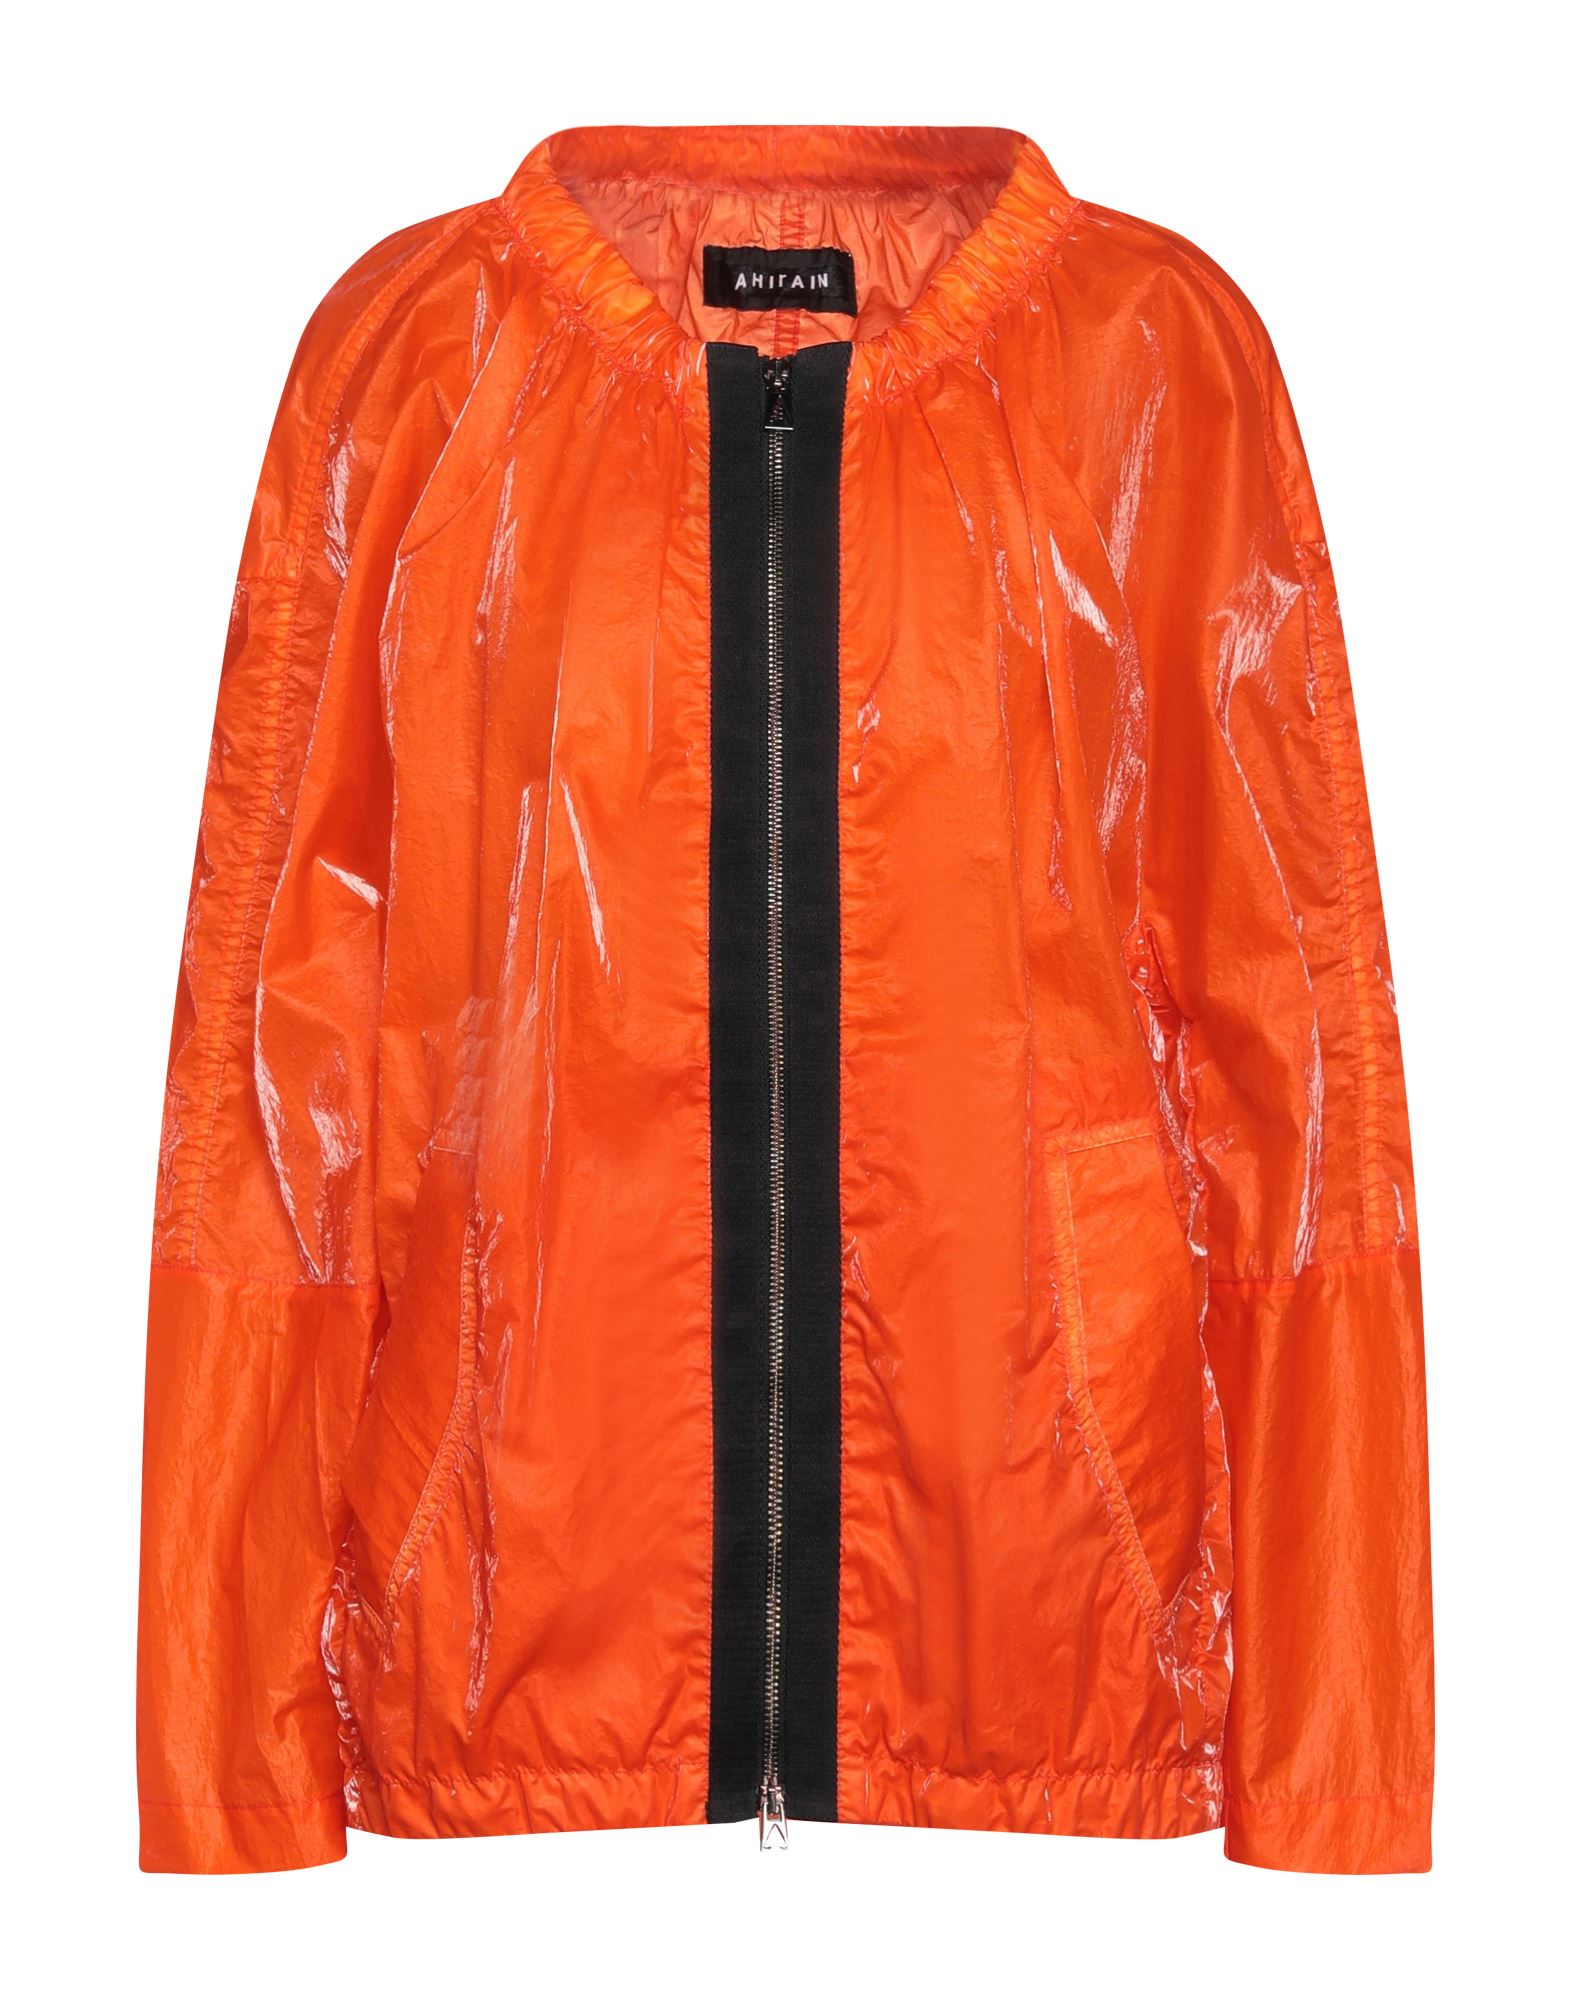 Ahirain Jackets In Orange